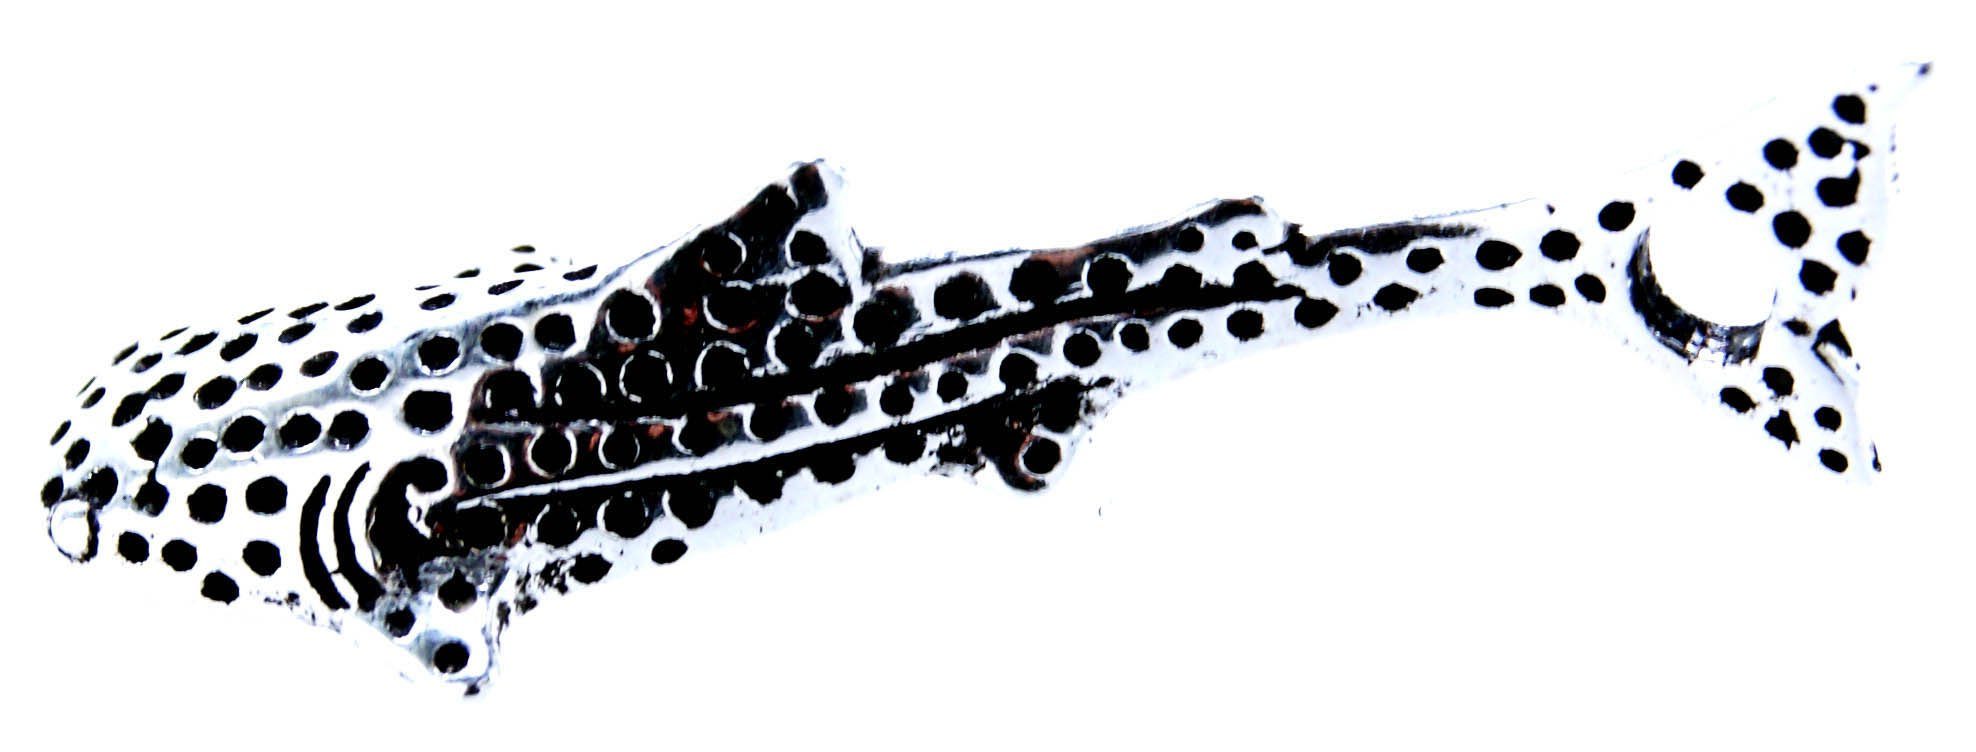 925 Walhai Haifisch Kiss Silber Sterling Leather Wasser Meer Kettenanhänger of aus